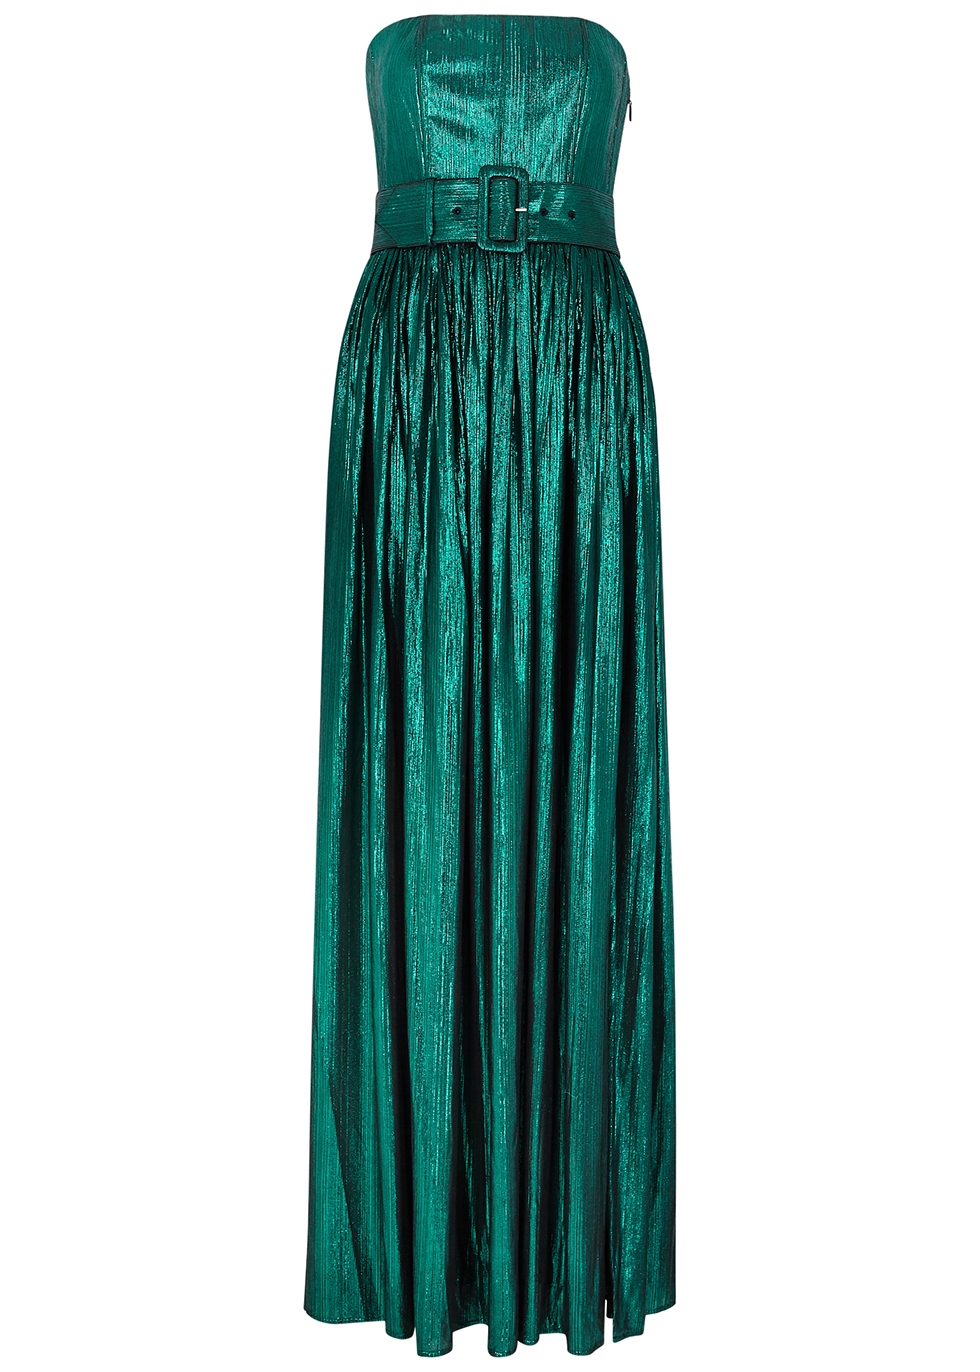 green metallic dress